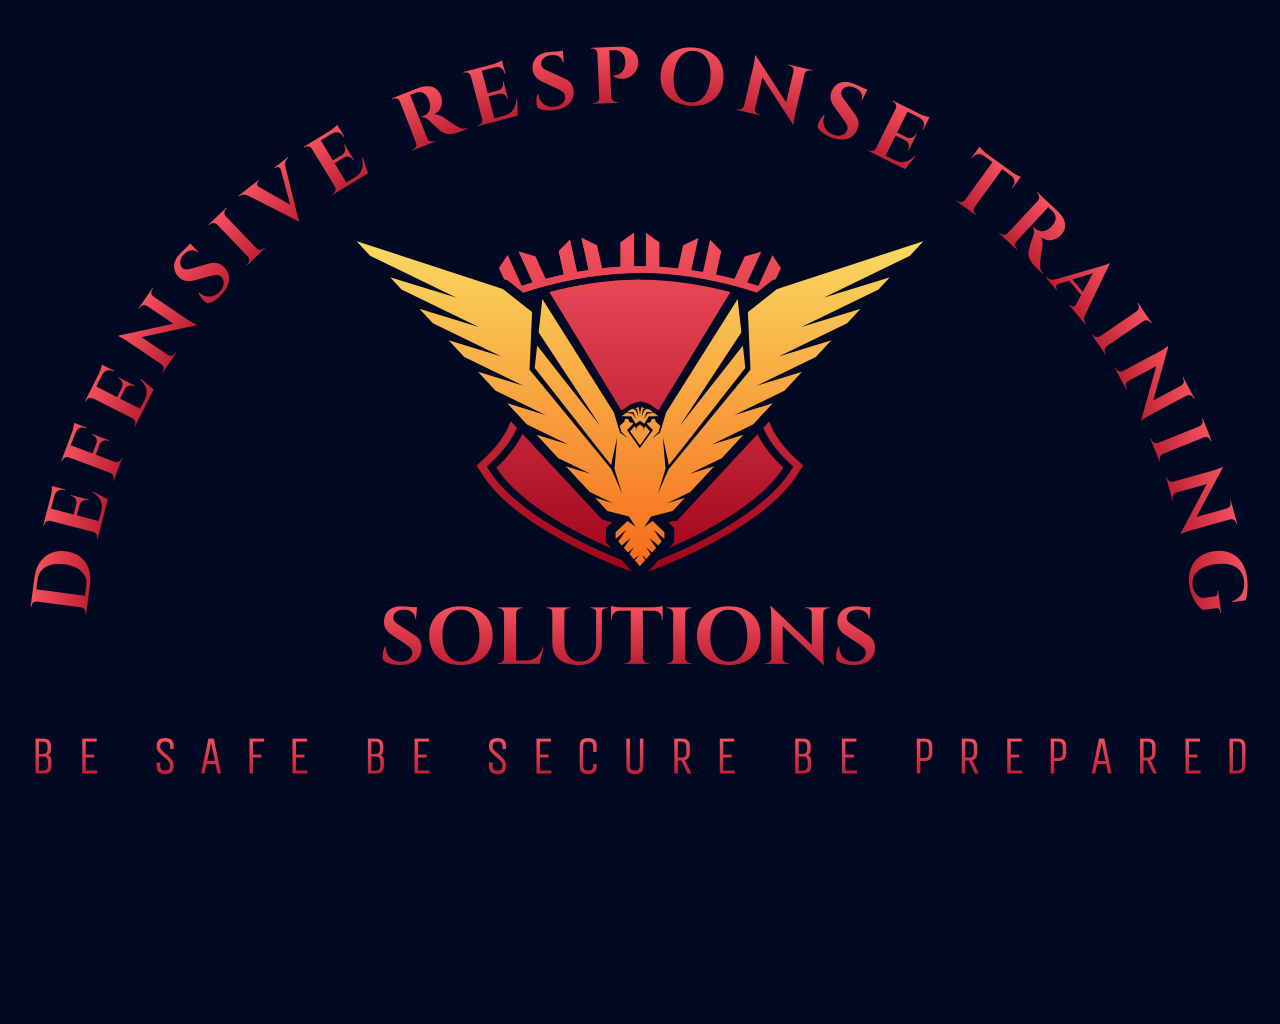 DEFENSIVE RESPONSE TRAINING SOLUTIONS's logo